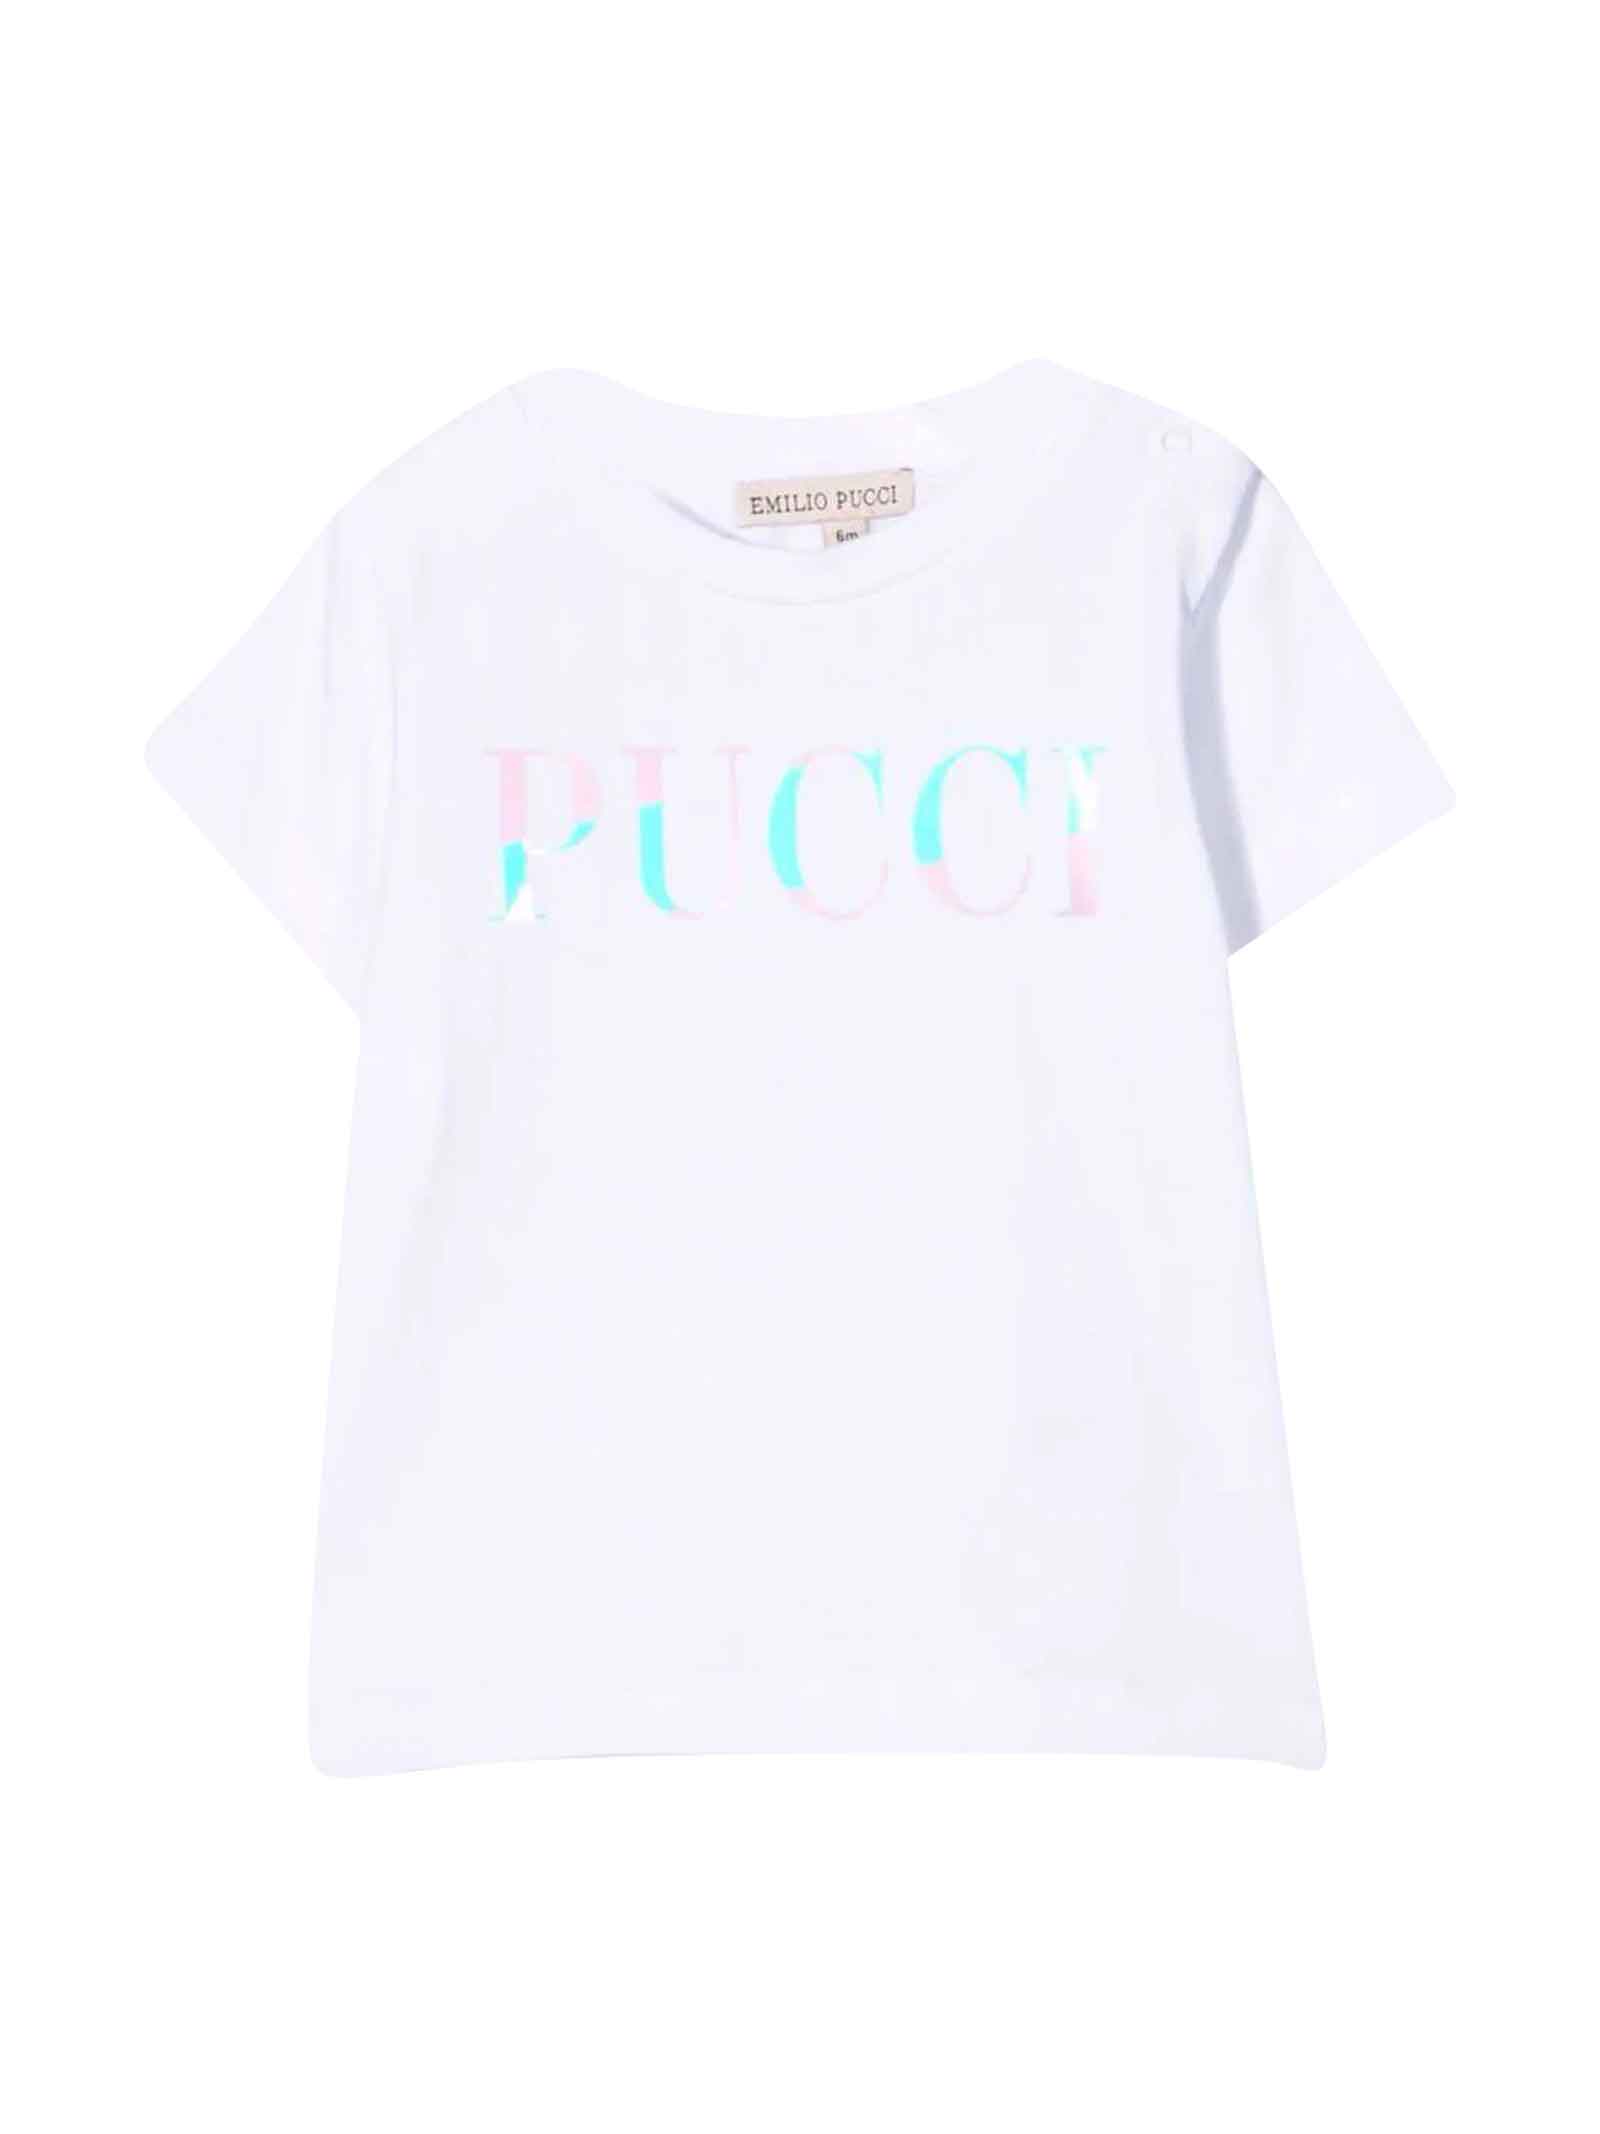 Emilio Pucci White T-shirt With Multicolor Print